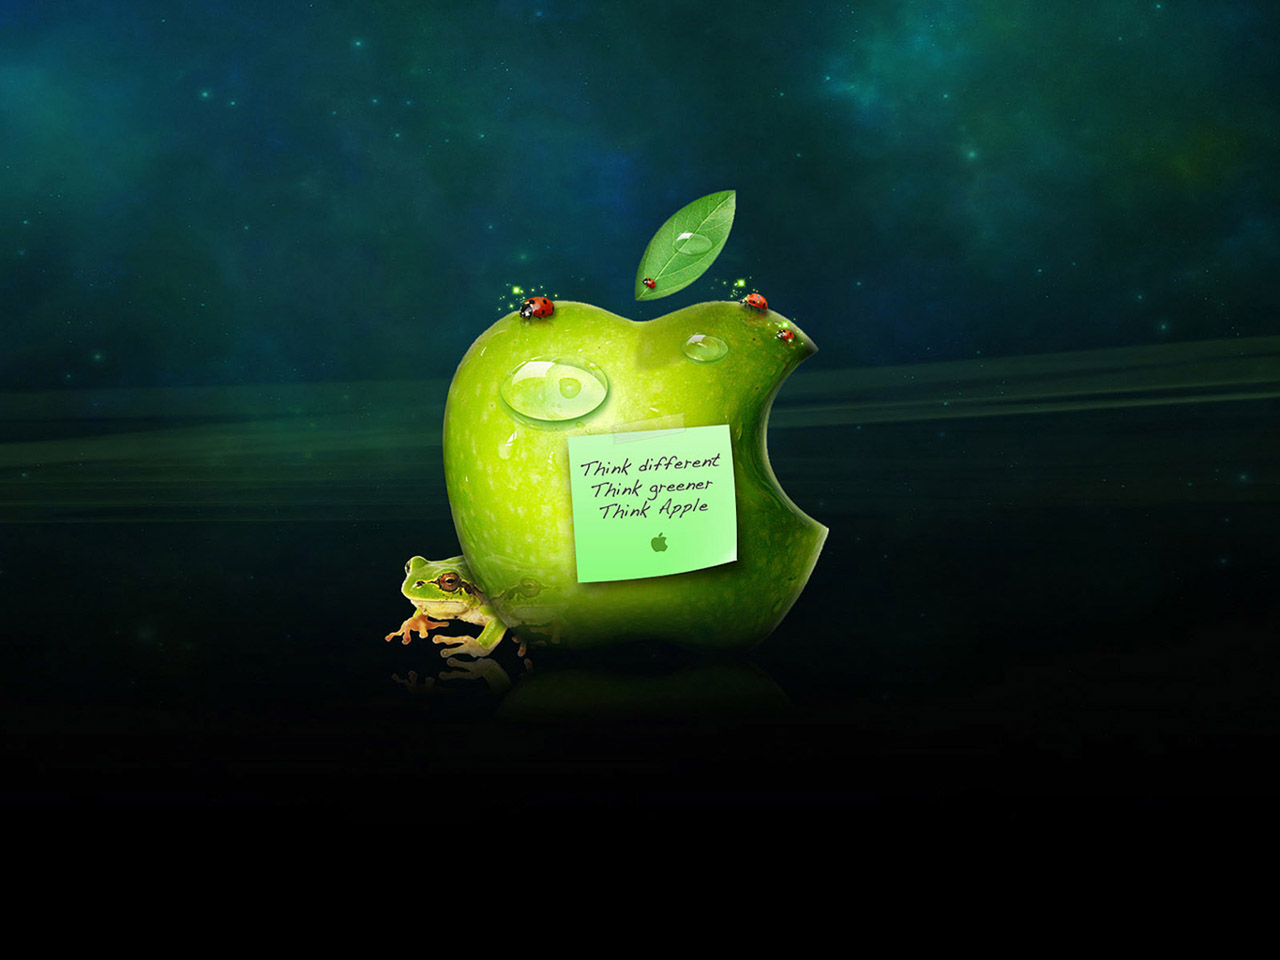 Green Apple Different7199419475 - Green Apple Different - Style, green, Different, Apple